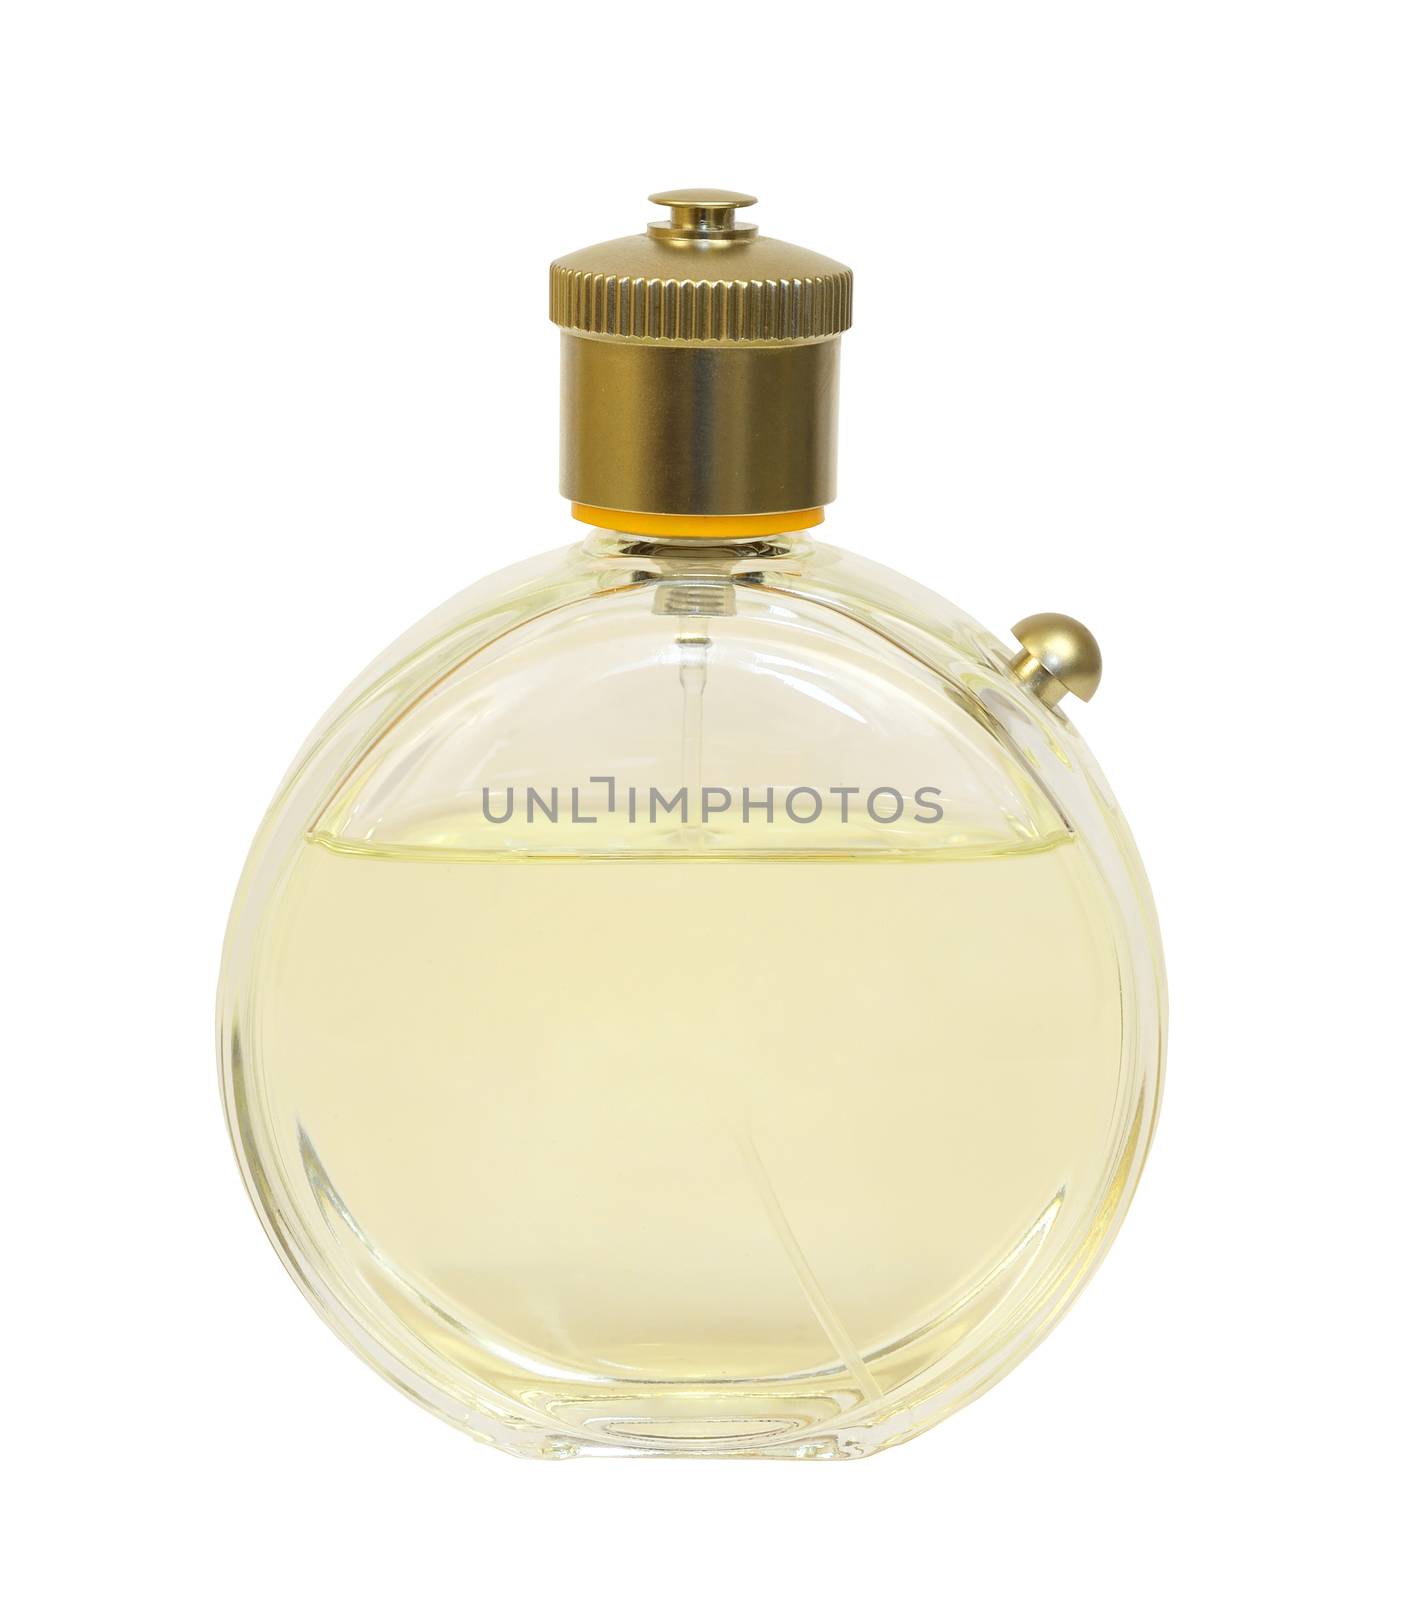 Perfume bottle by cherezoff